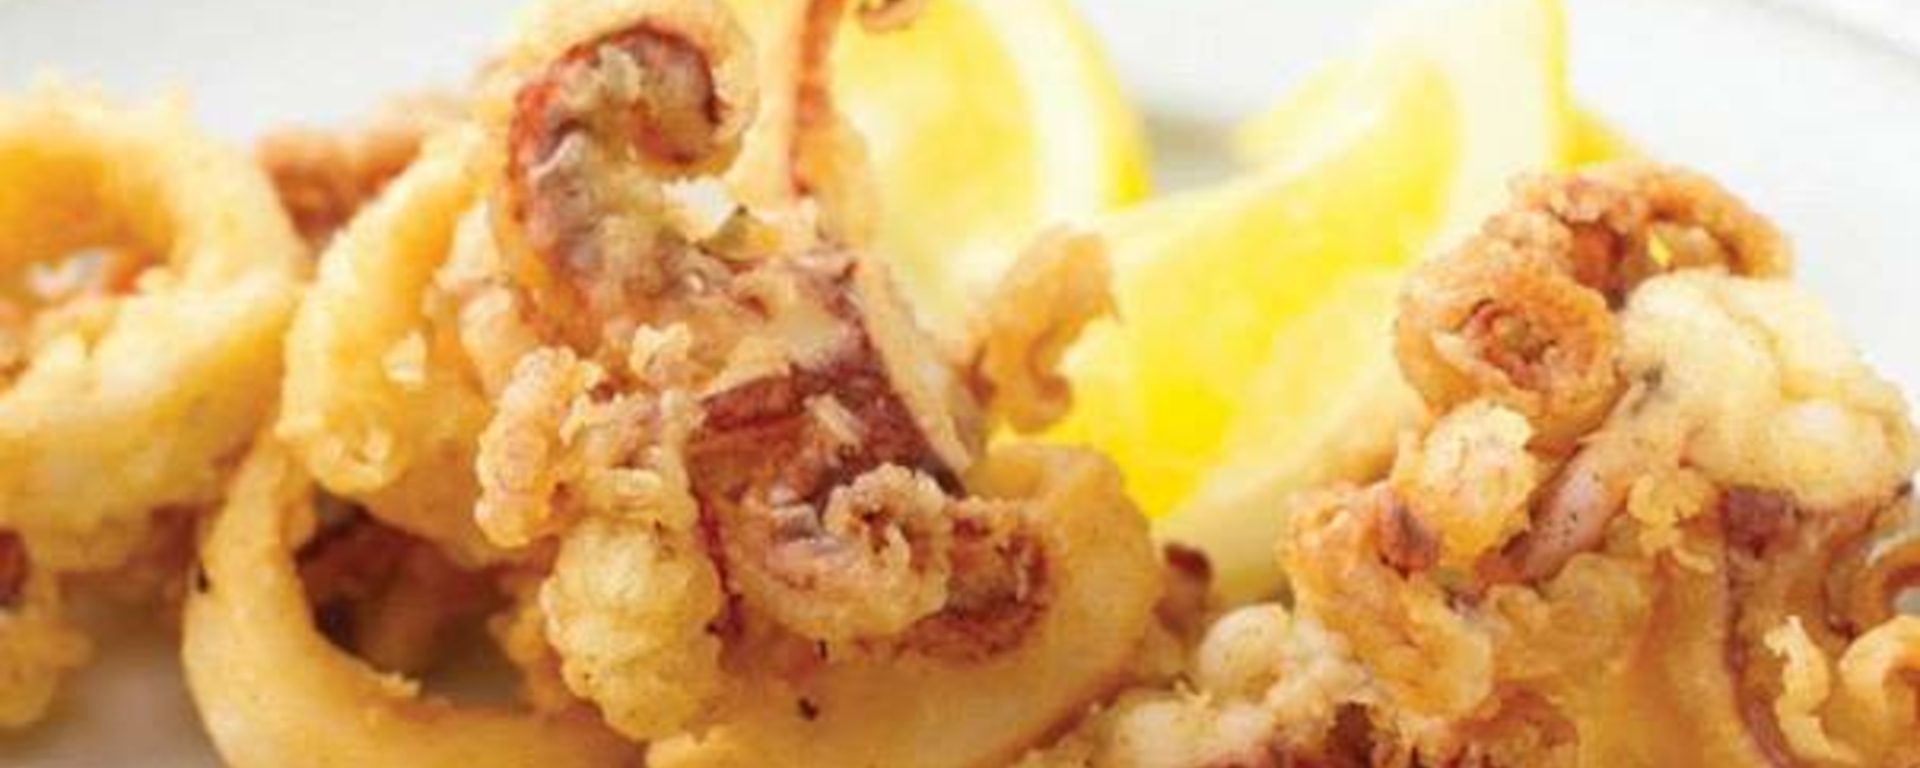 Tasty Deep Fried Calamari